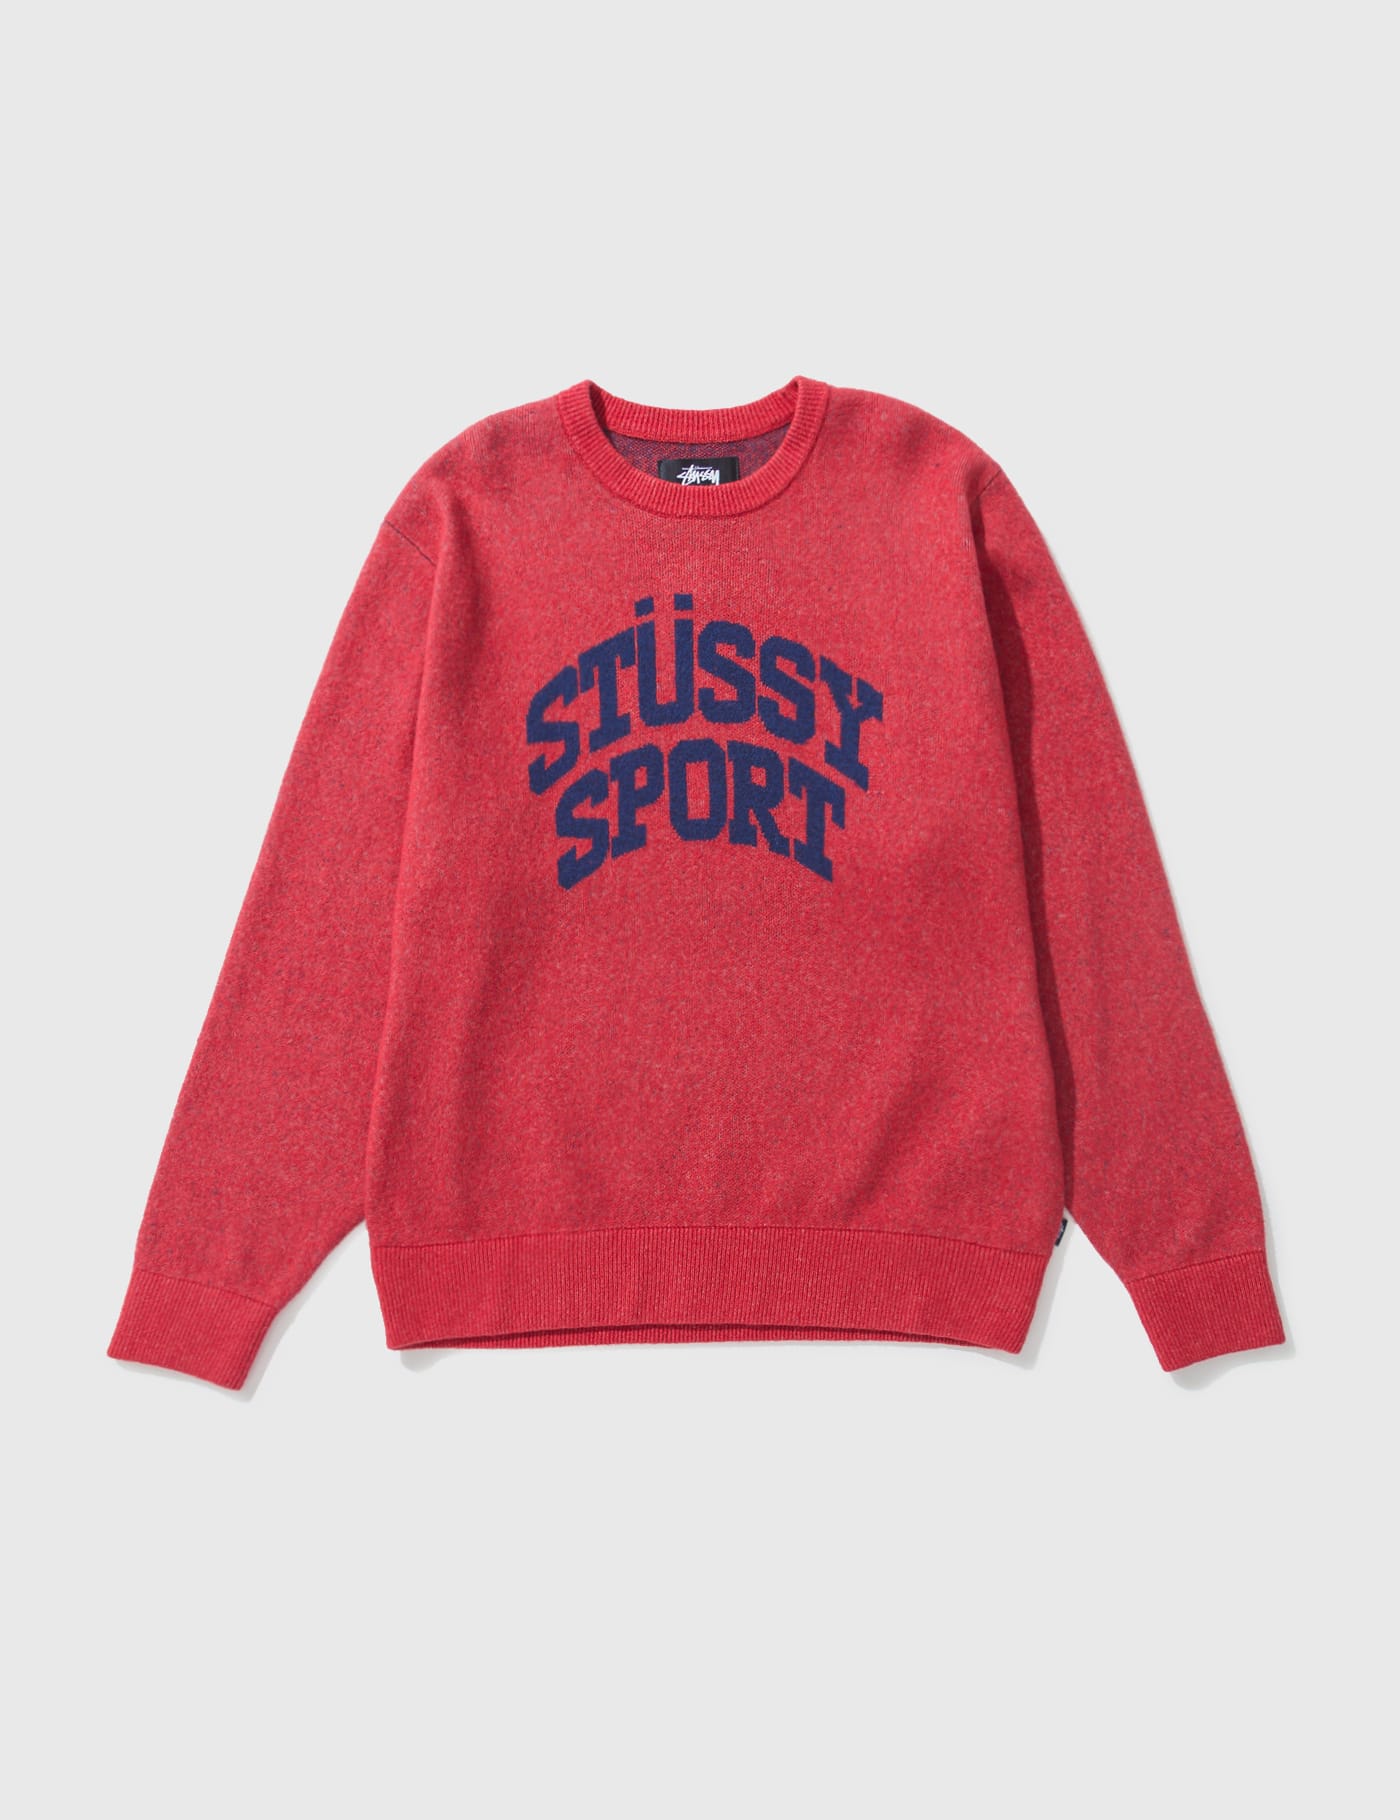 Stüssy - Stussy スポーツセーター | HBX - ハイプビースト(Hypebeast ...